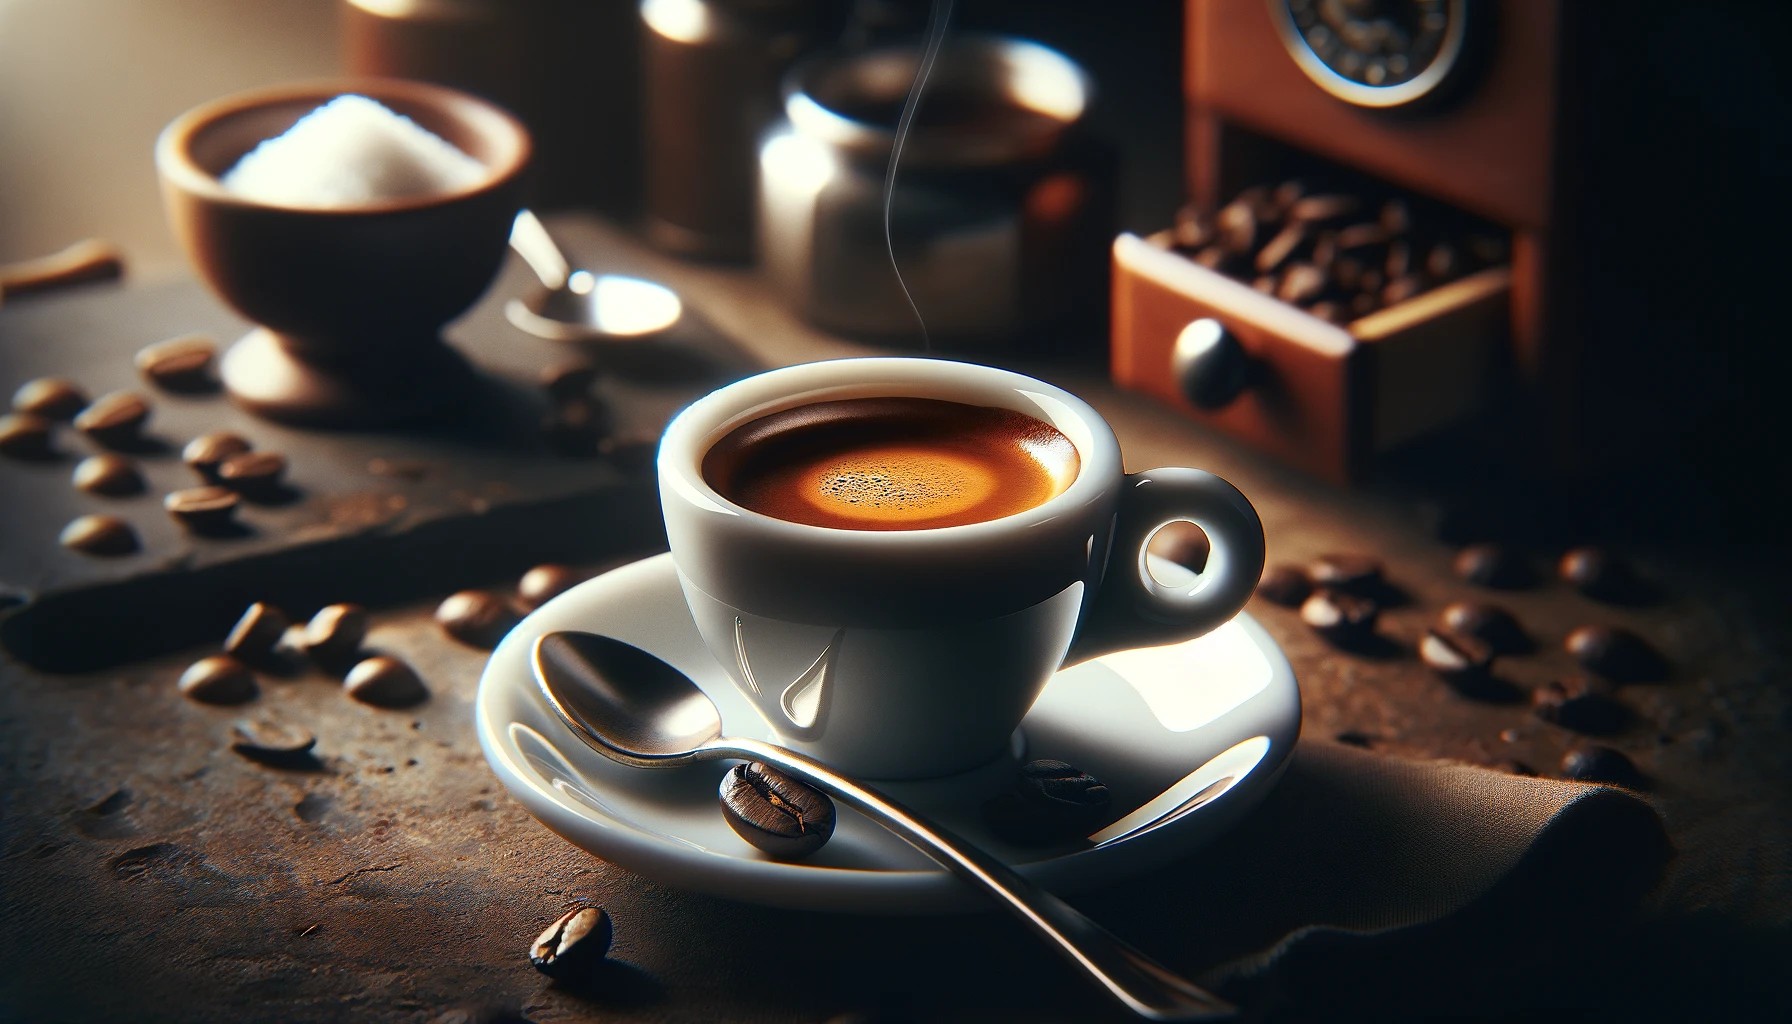 義式咖啡 手沖咖啡 研磨 萃取 烘焙 濃縮咖啡 咖啡粉量 Italian coffee, hand-brewed coffee, grinding, extraction, roasting, espresso, coffee powder quantity